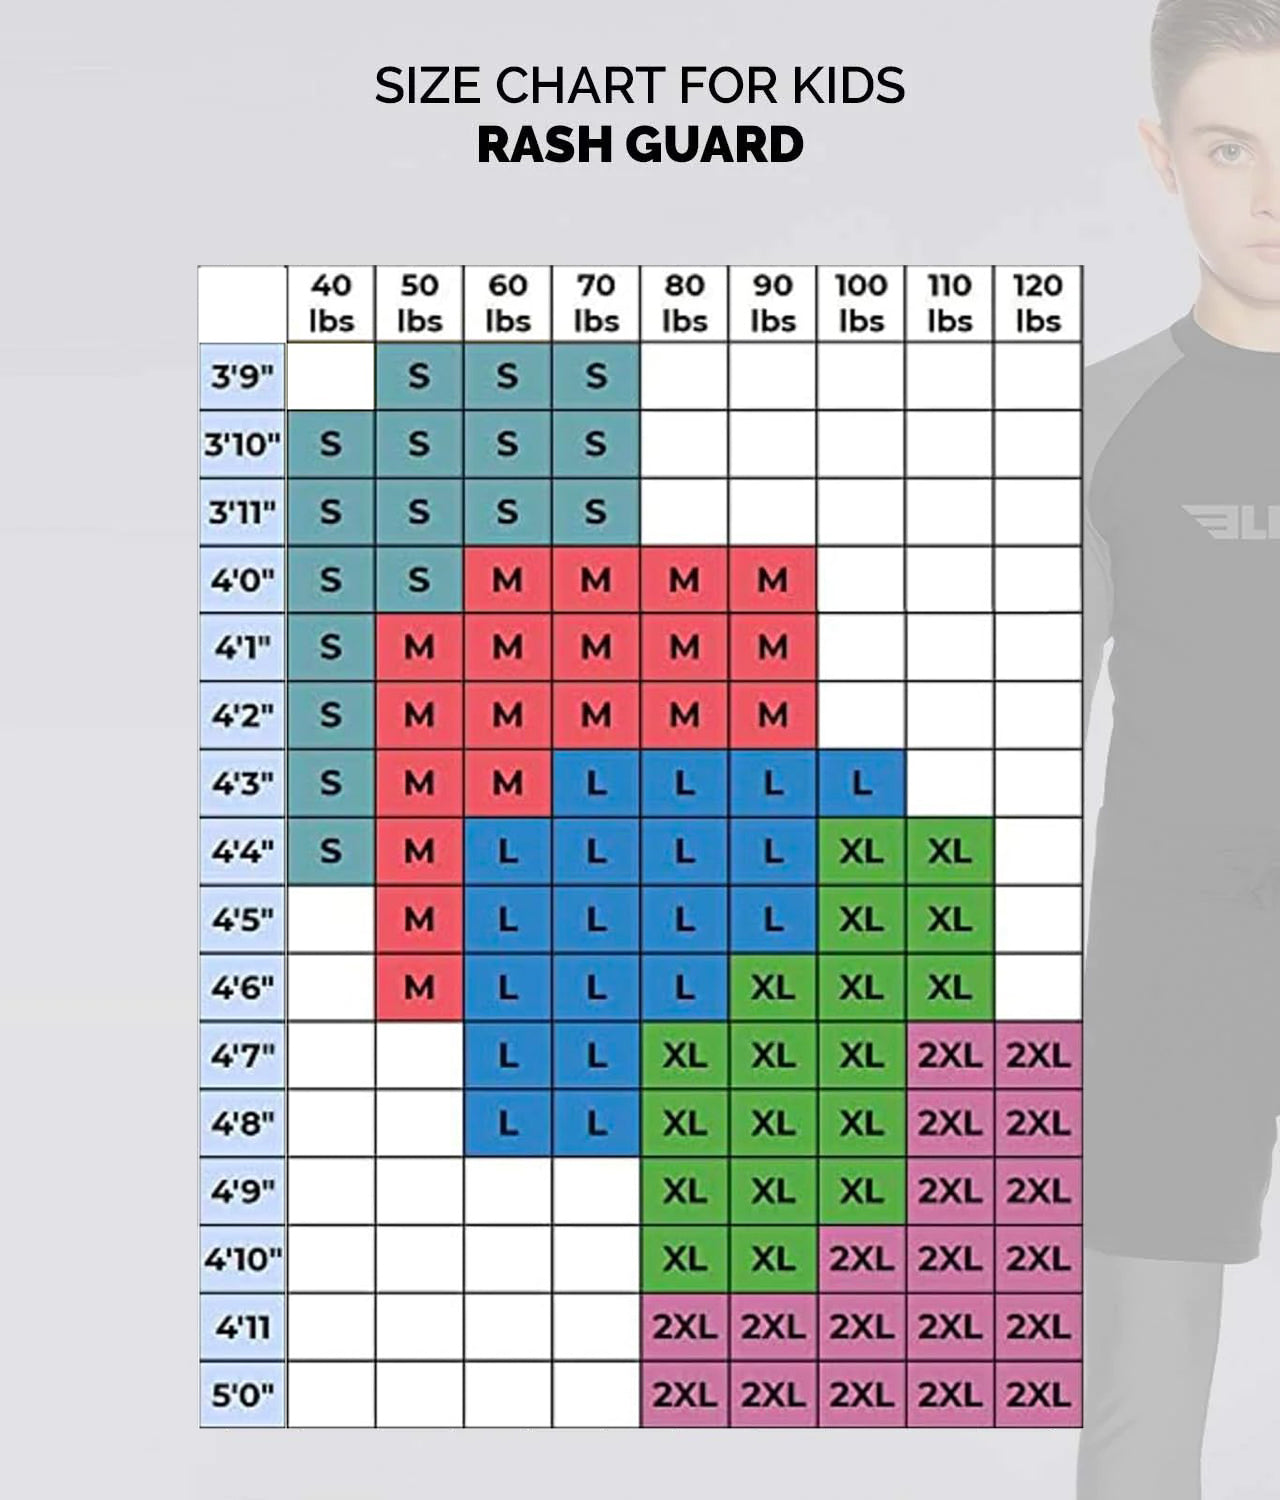 Kids' Standard Green Short Sleeve BJJ Rash Guard